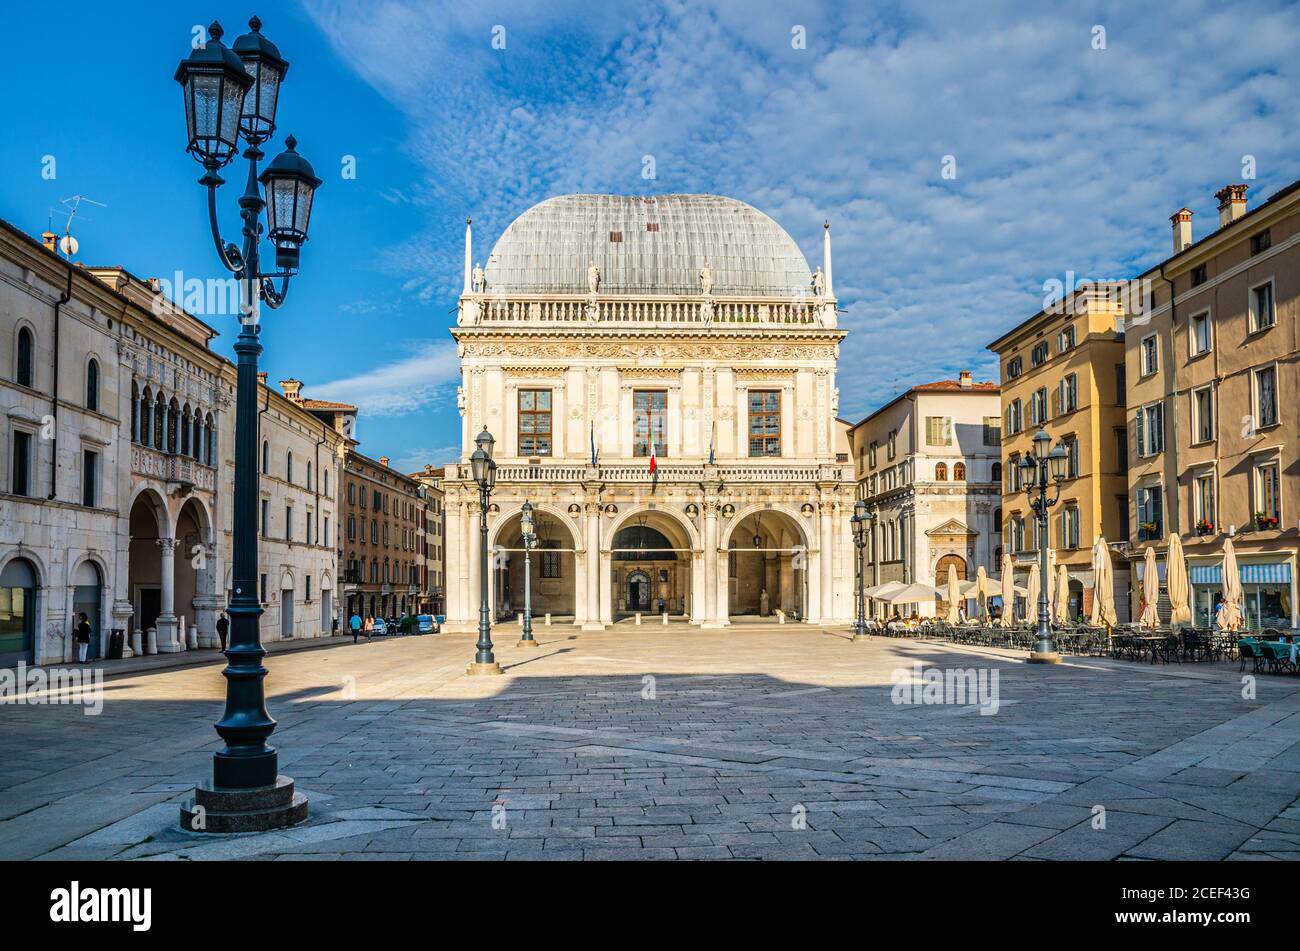 Palazzo della Loggia palace Town Hall Renaissance style building and street lights in Piazza della Loggia Square, Brescia city historical centre, blue sky background, Lombardy, Northern Italy Stock Photo